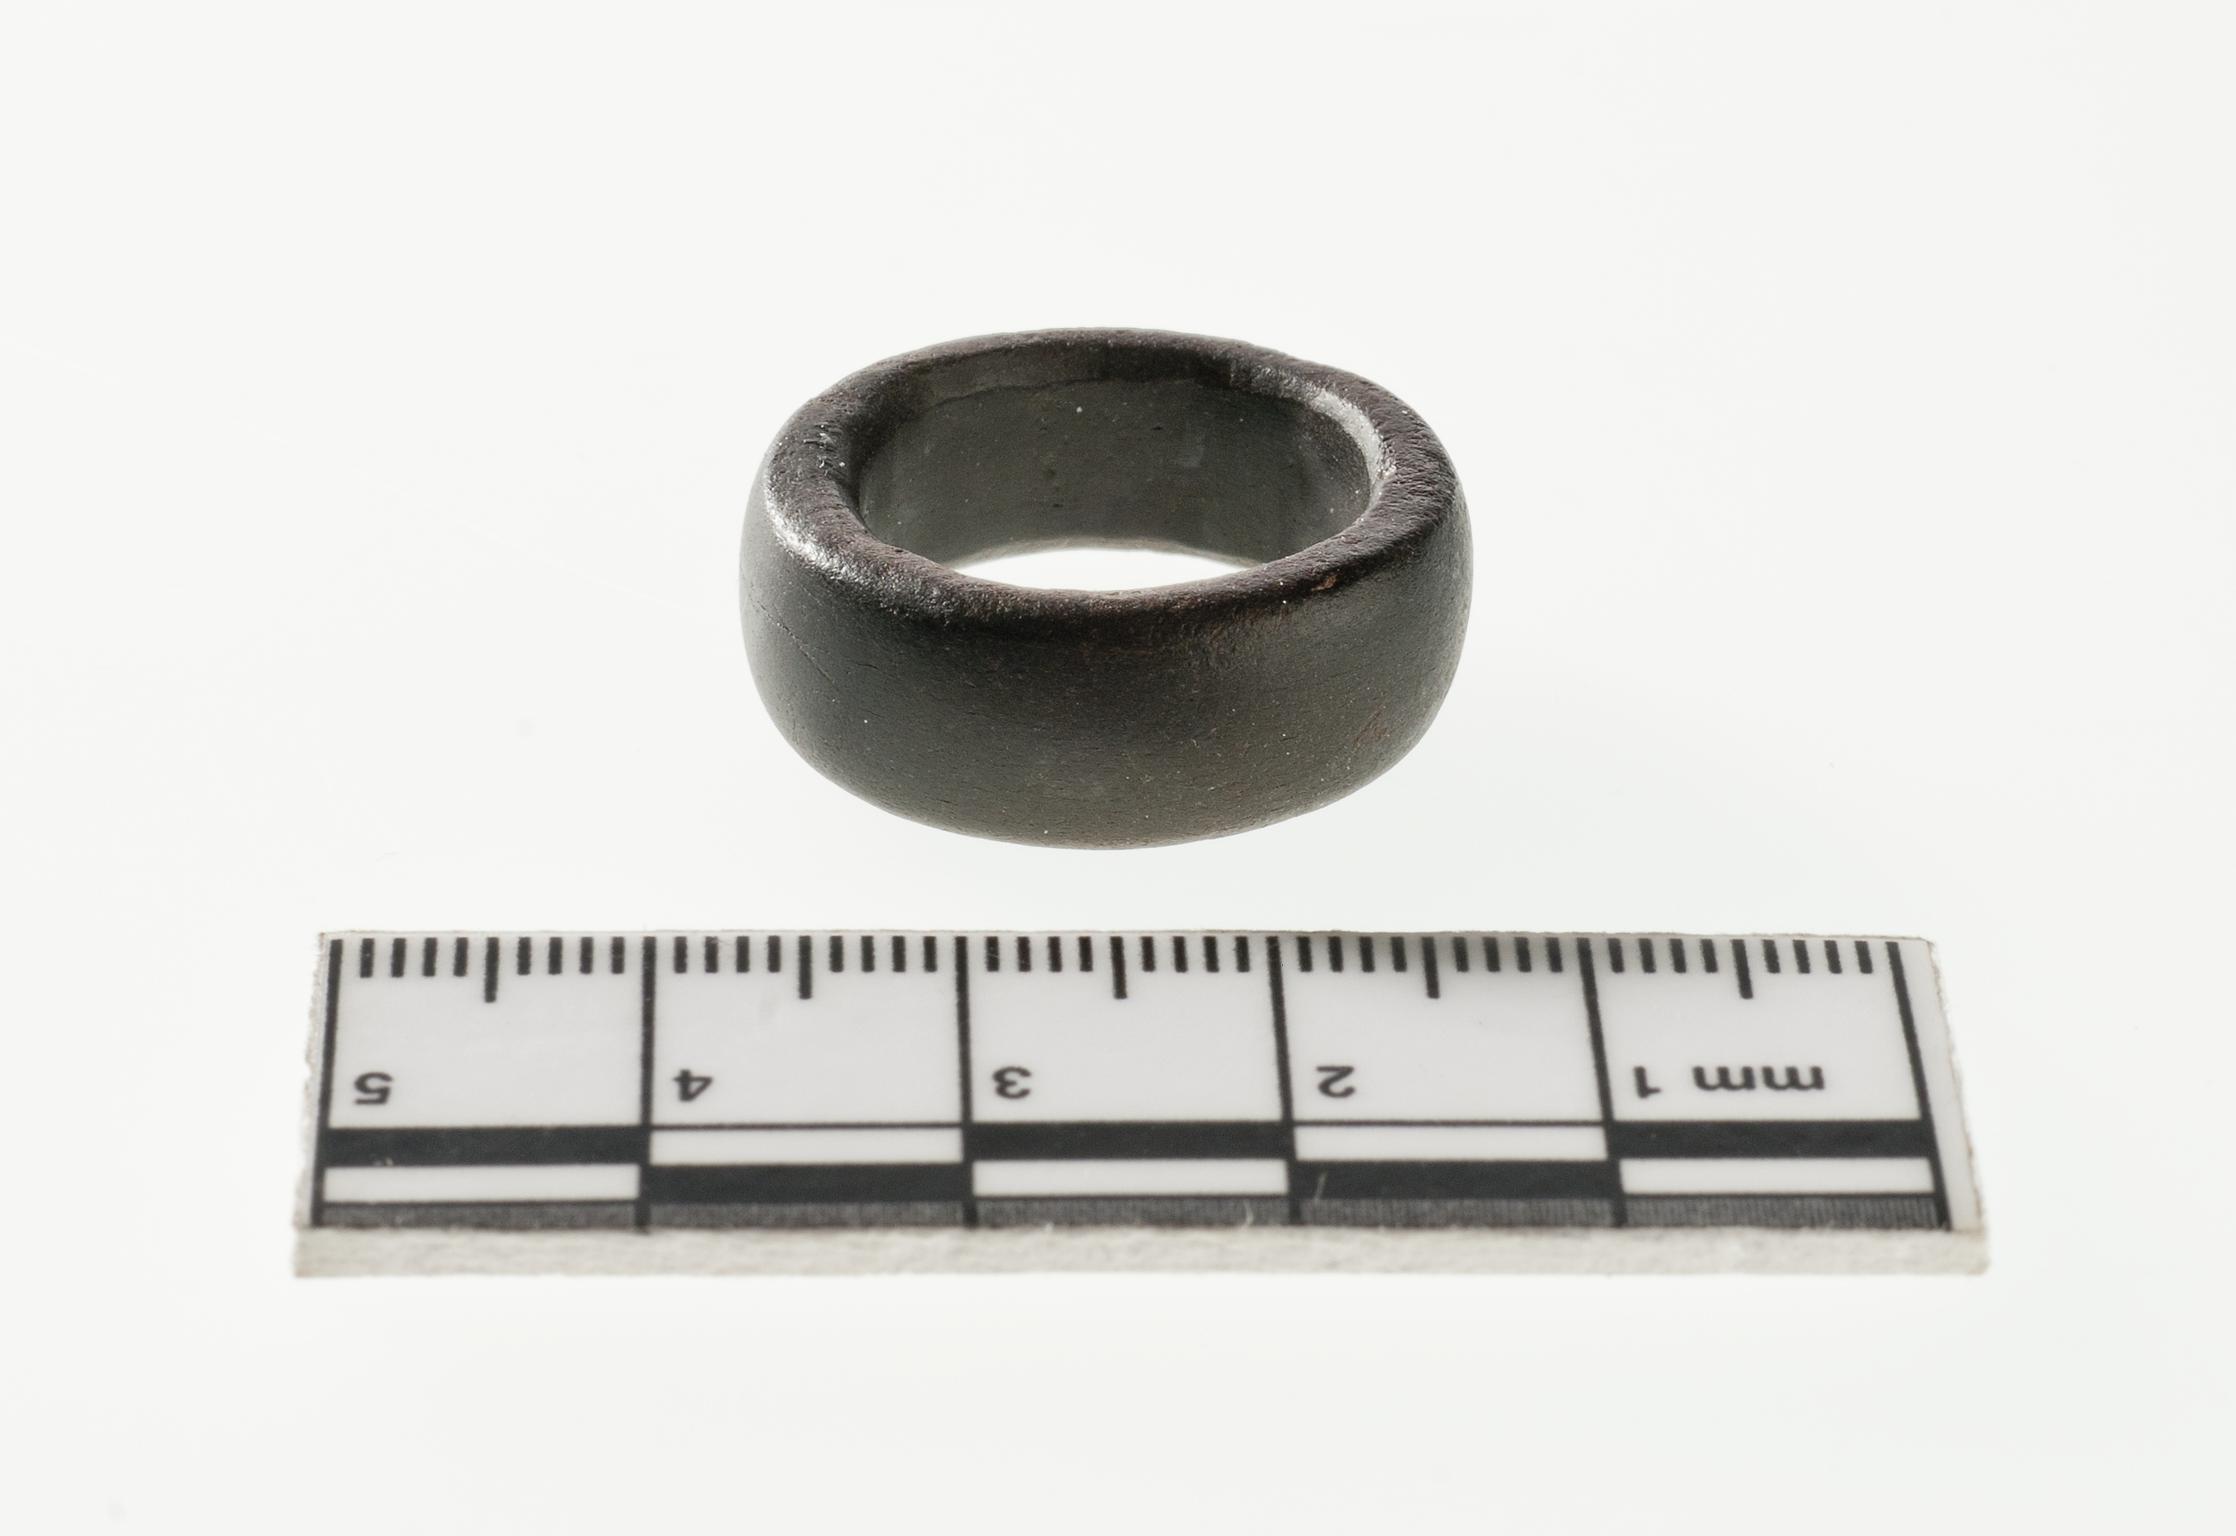 Early Medieval lignite finger ring